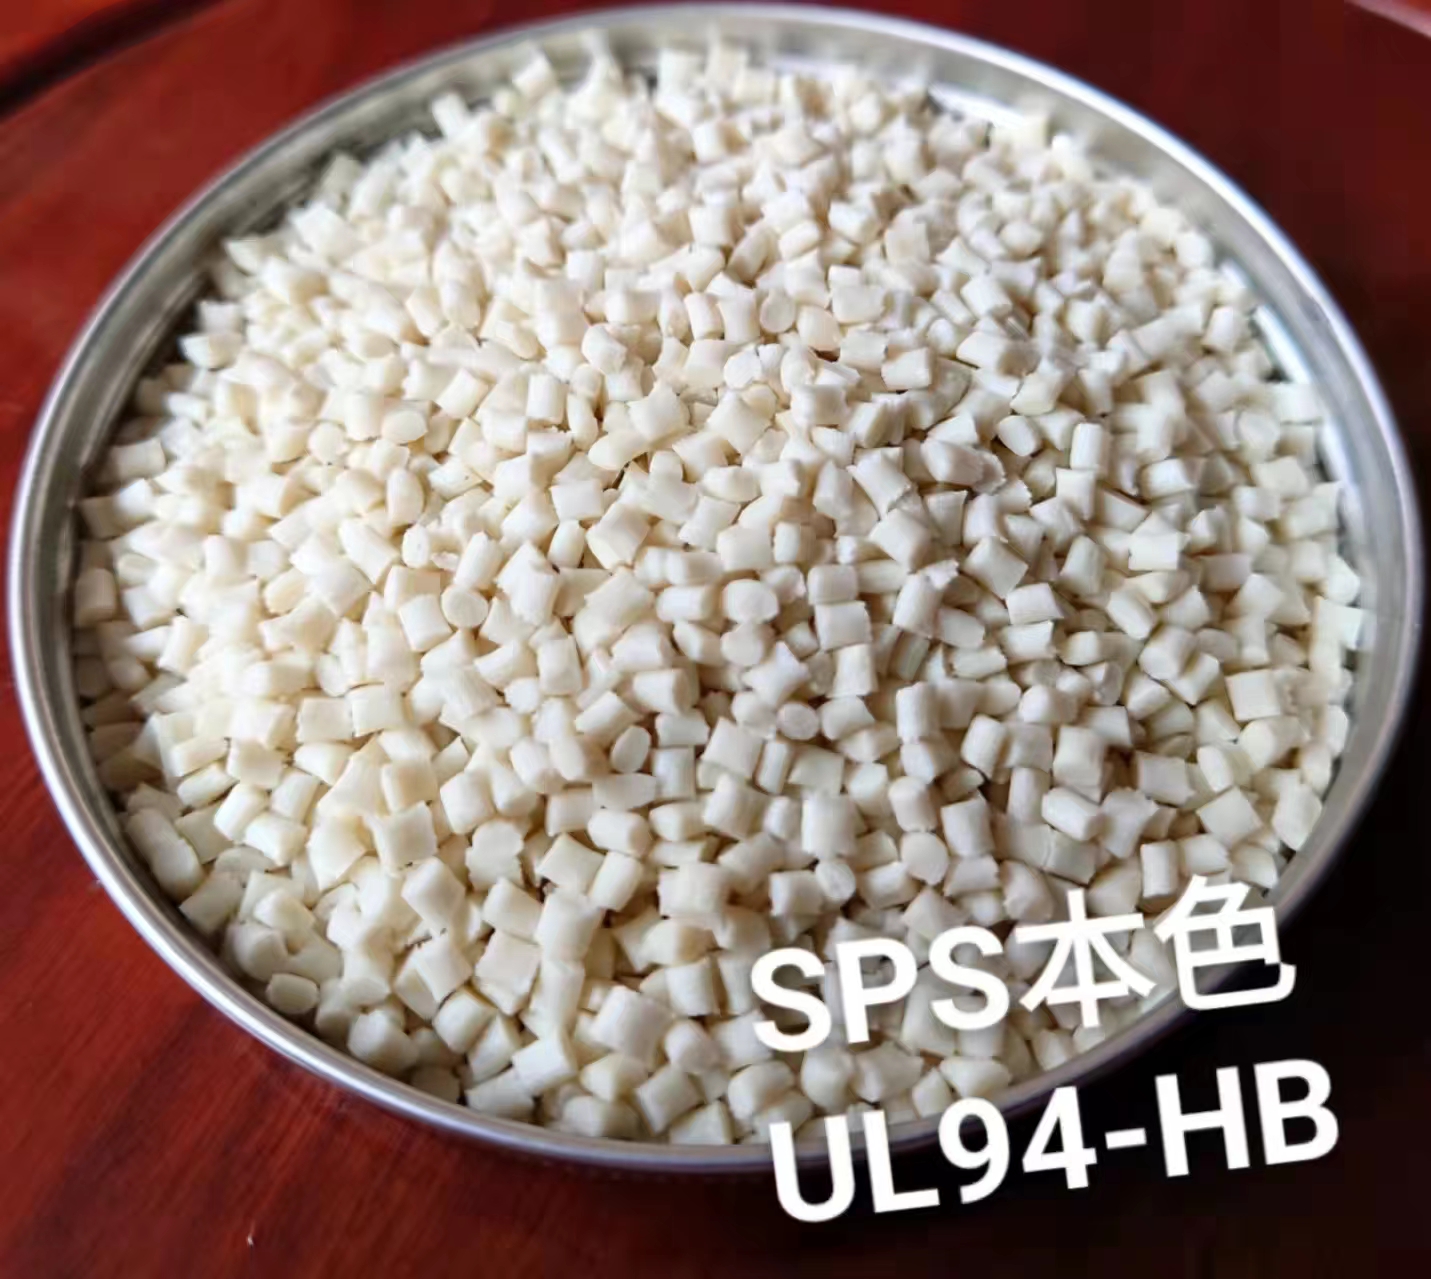 SPS本色颗粒 UL94-HB